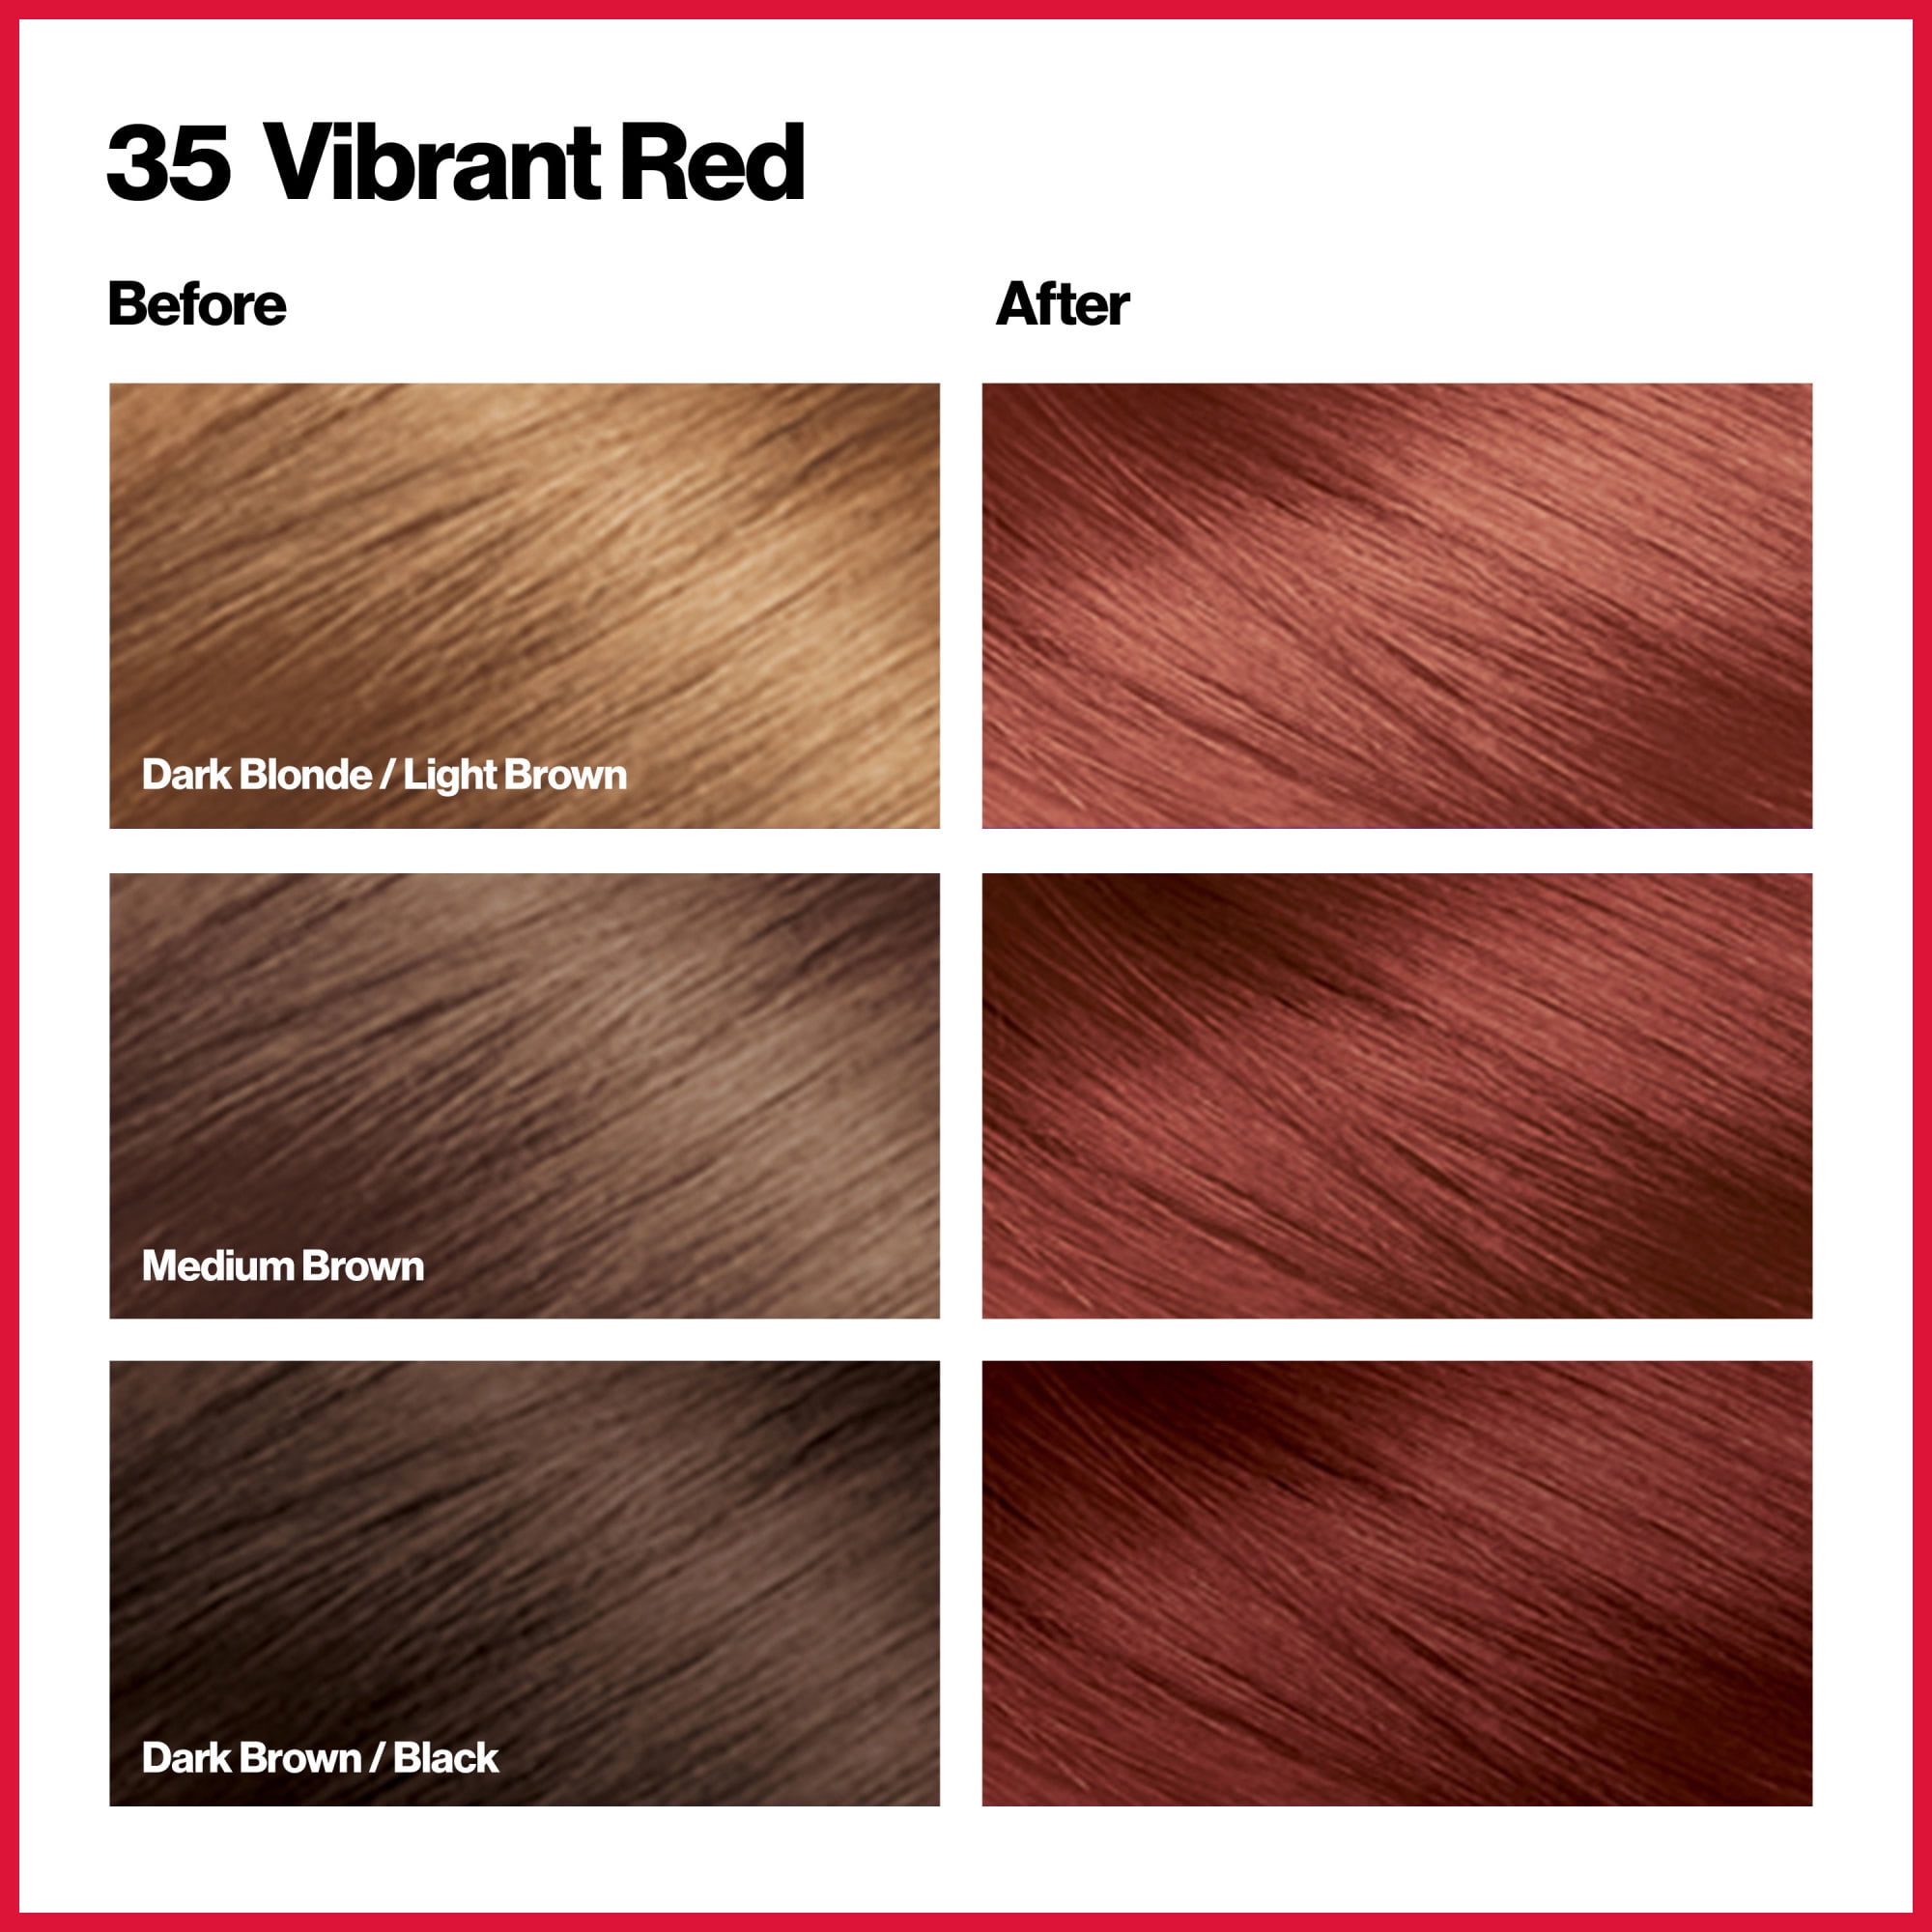 Revlon ColorSilk Beautiful Permanent Hair Color, 35 Vibrant Red, 1 Count -  